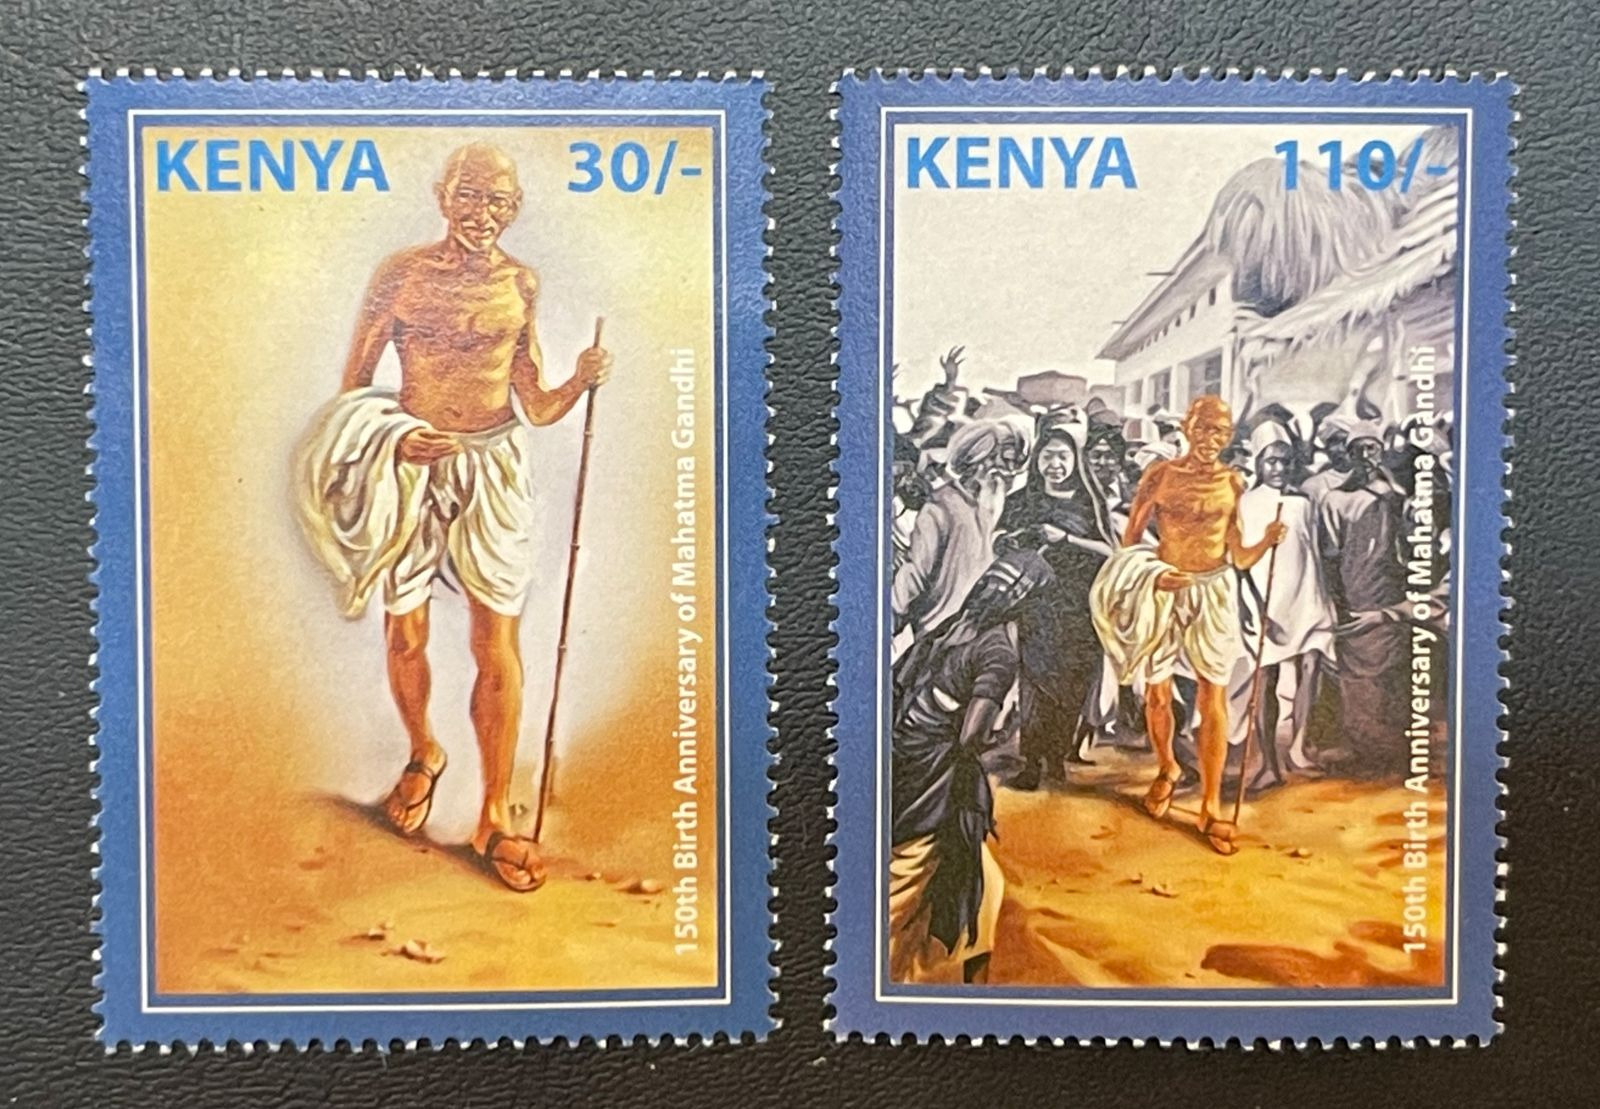 Kenya 2019 150th Anniversary of Mahatma Gandhi 2v set MNH